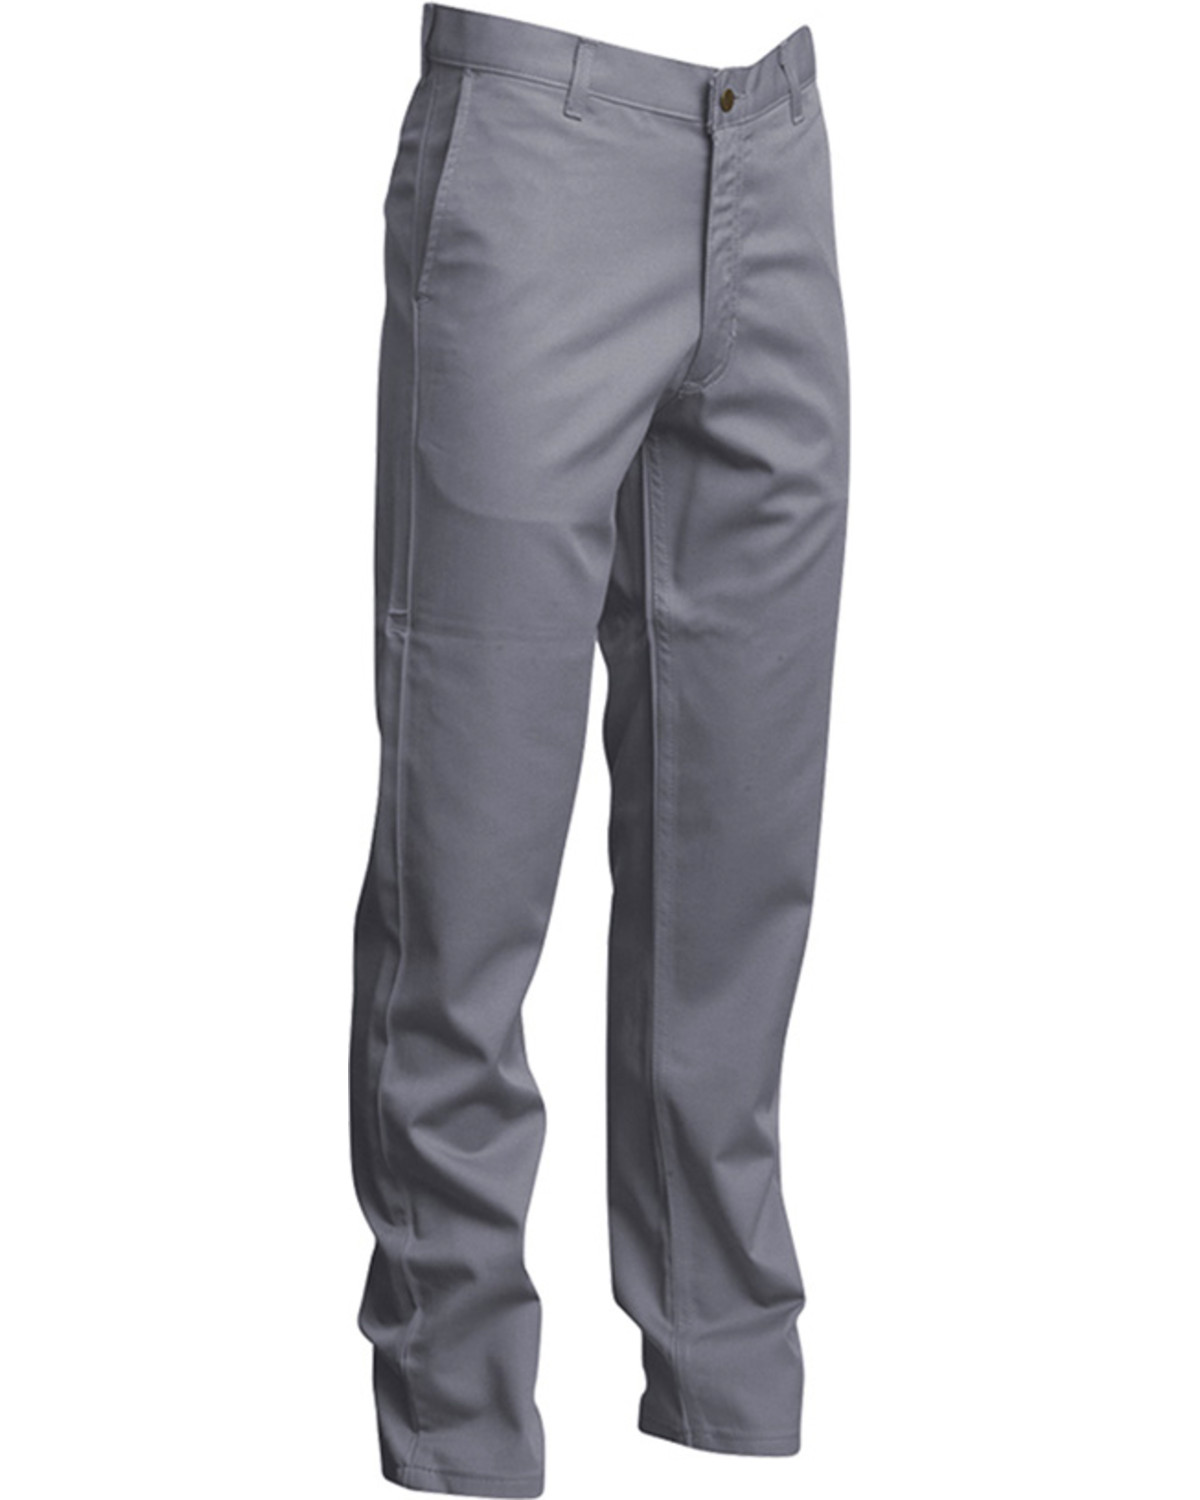 Lapco Men's Grey FR UltraSoft Uniform Pants - Straight Leg | Boot Barn